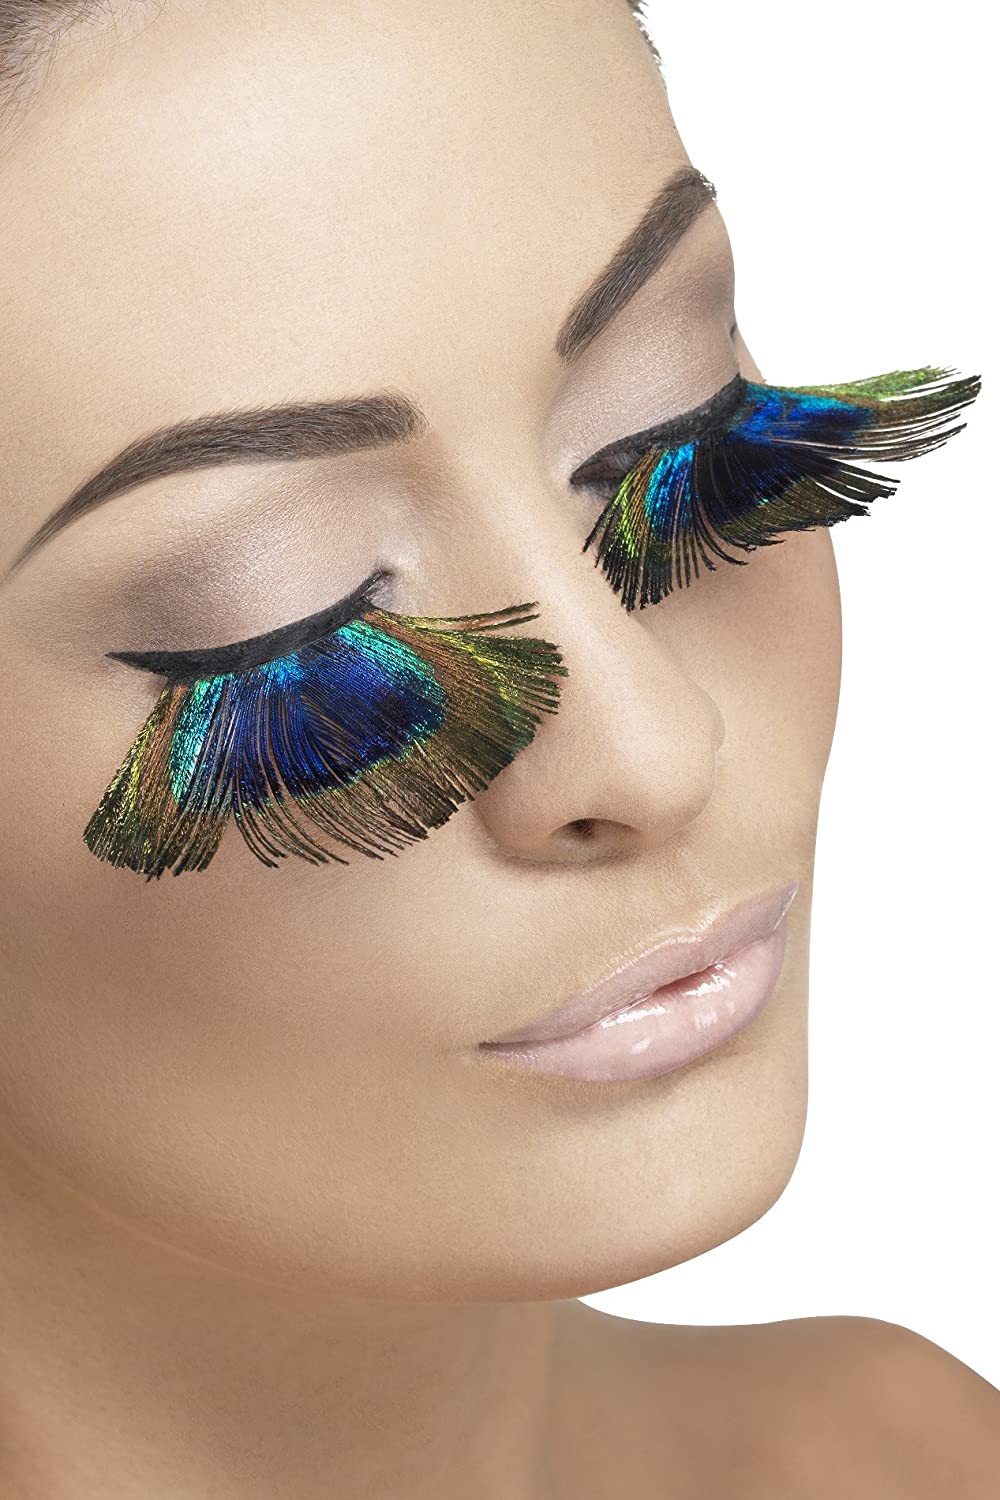 Smiffys Eyelashes Peacock Feathers Contains Glue